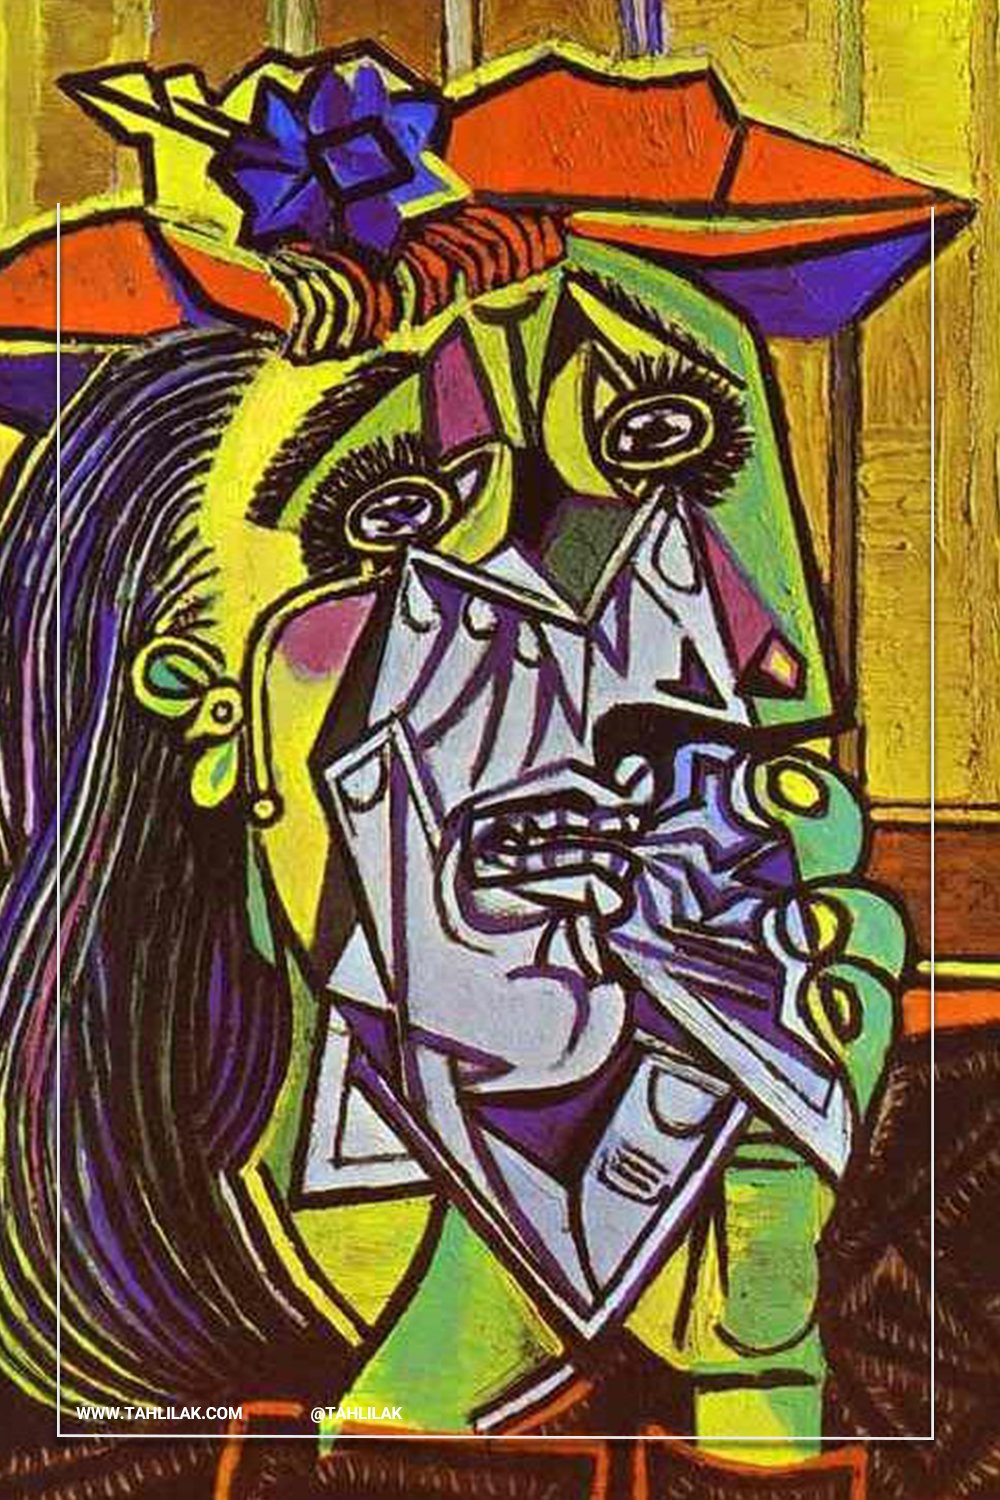 پابلو پیکاسو (Pablo Picasso) هنرمند صاحب سبک و استاد برجسته جنبش کوبیسم